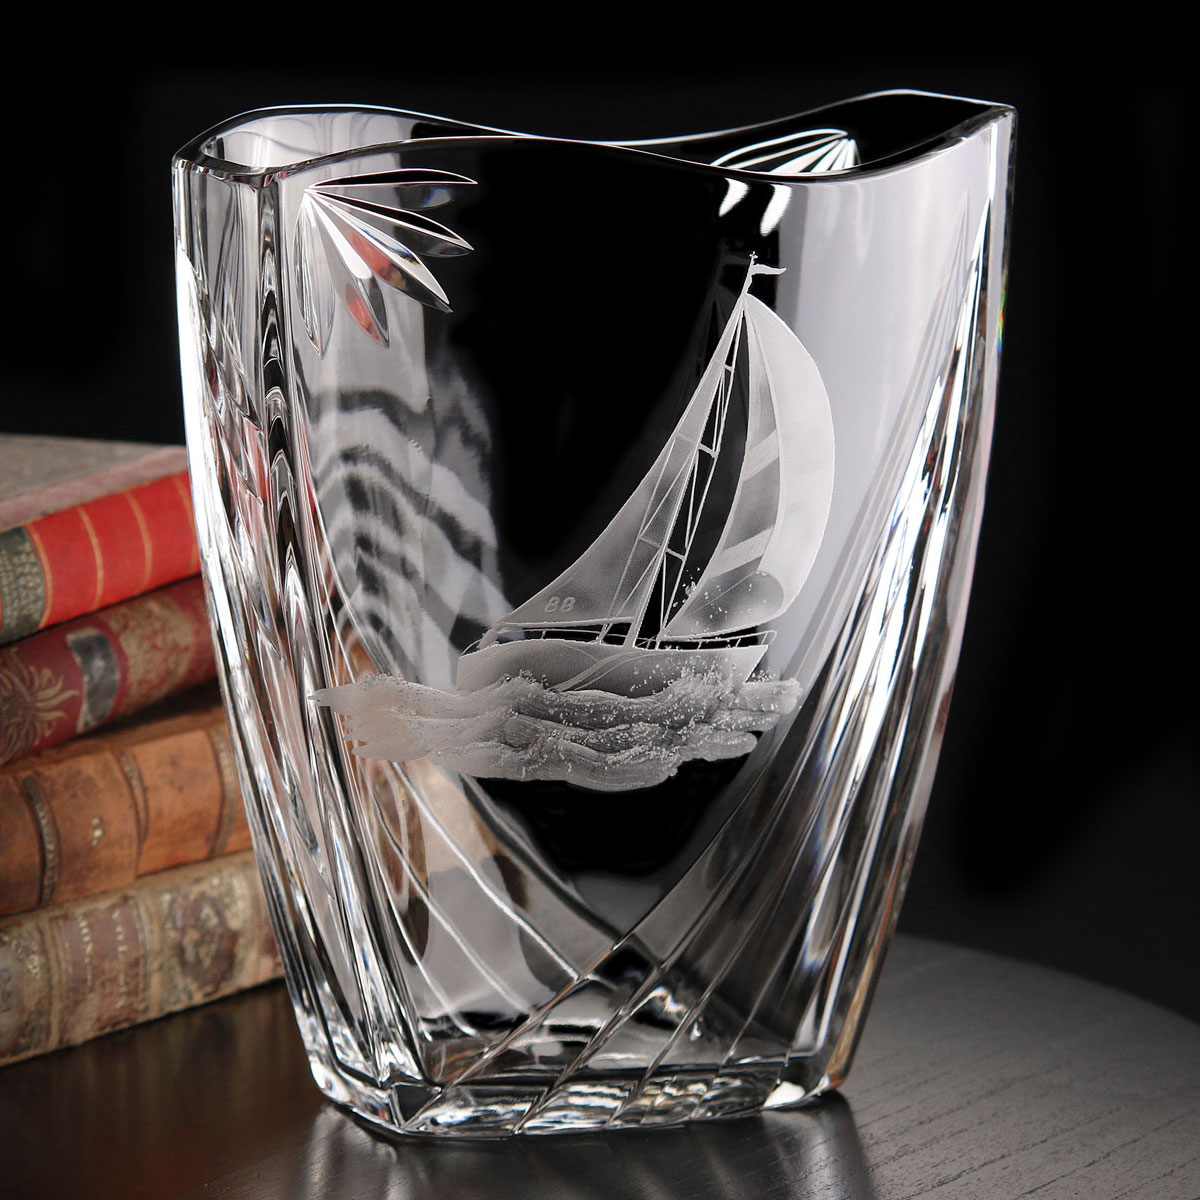 Cashs Ireland, Art Collection Sailing Series Windward Crystal Vase, Limited Edition